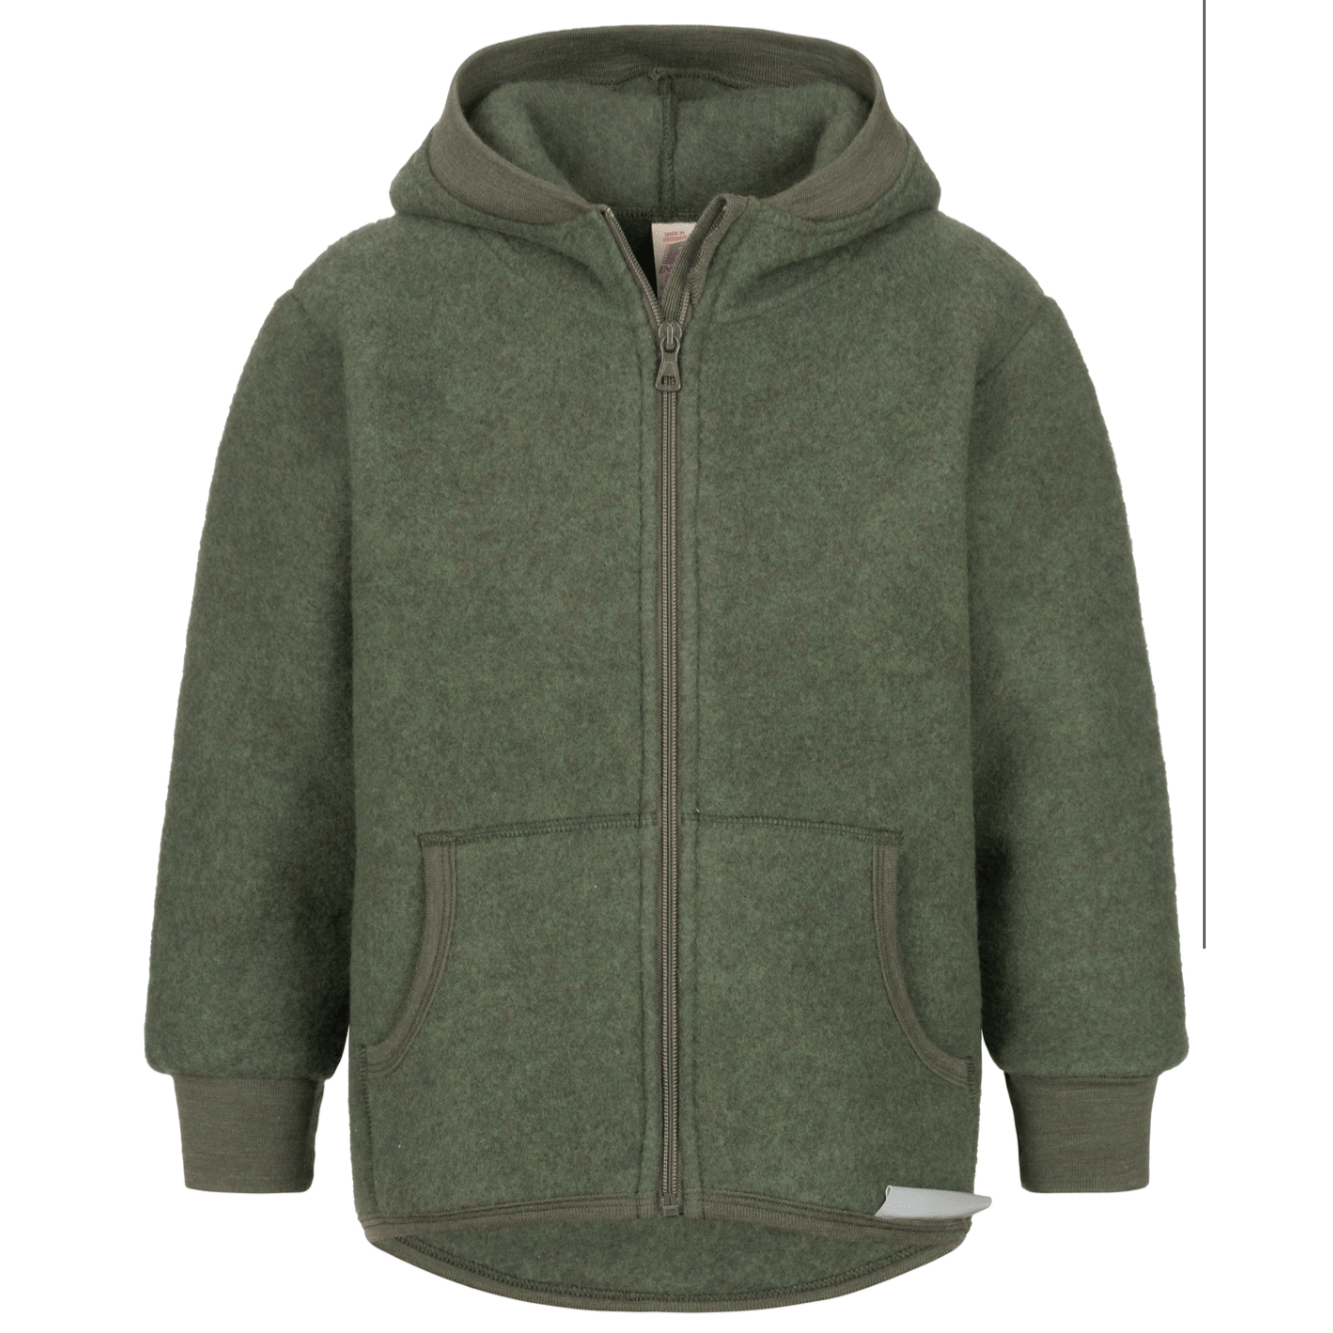 Engel - Organic Wool Fleece Jacket for Kids (5-10 years - 2 colors) - Nature's Wild Child